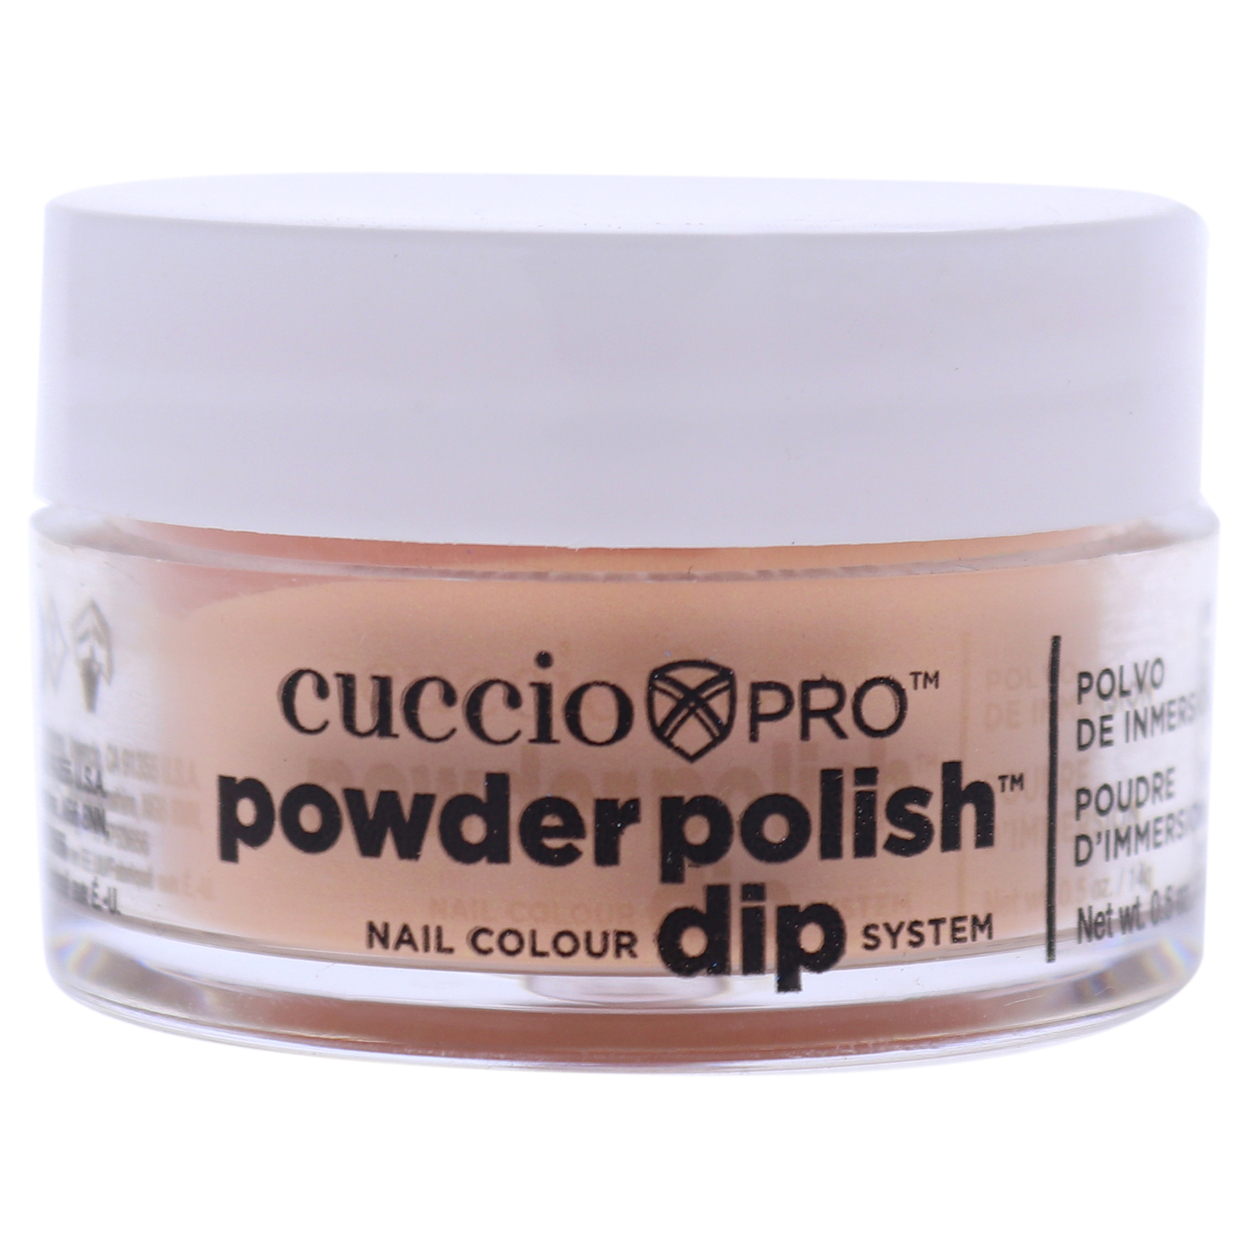 Cuccio Colour Pro Powder Polish Nail Colour Dip System - Bright Orange Nail Powder 0.5 Oz